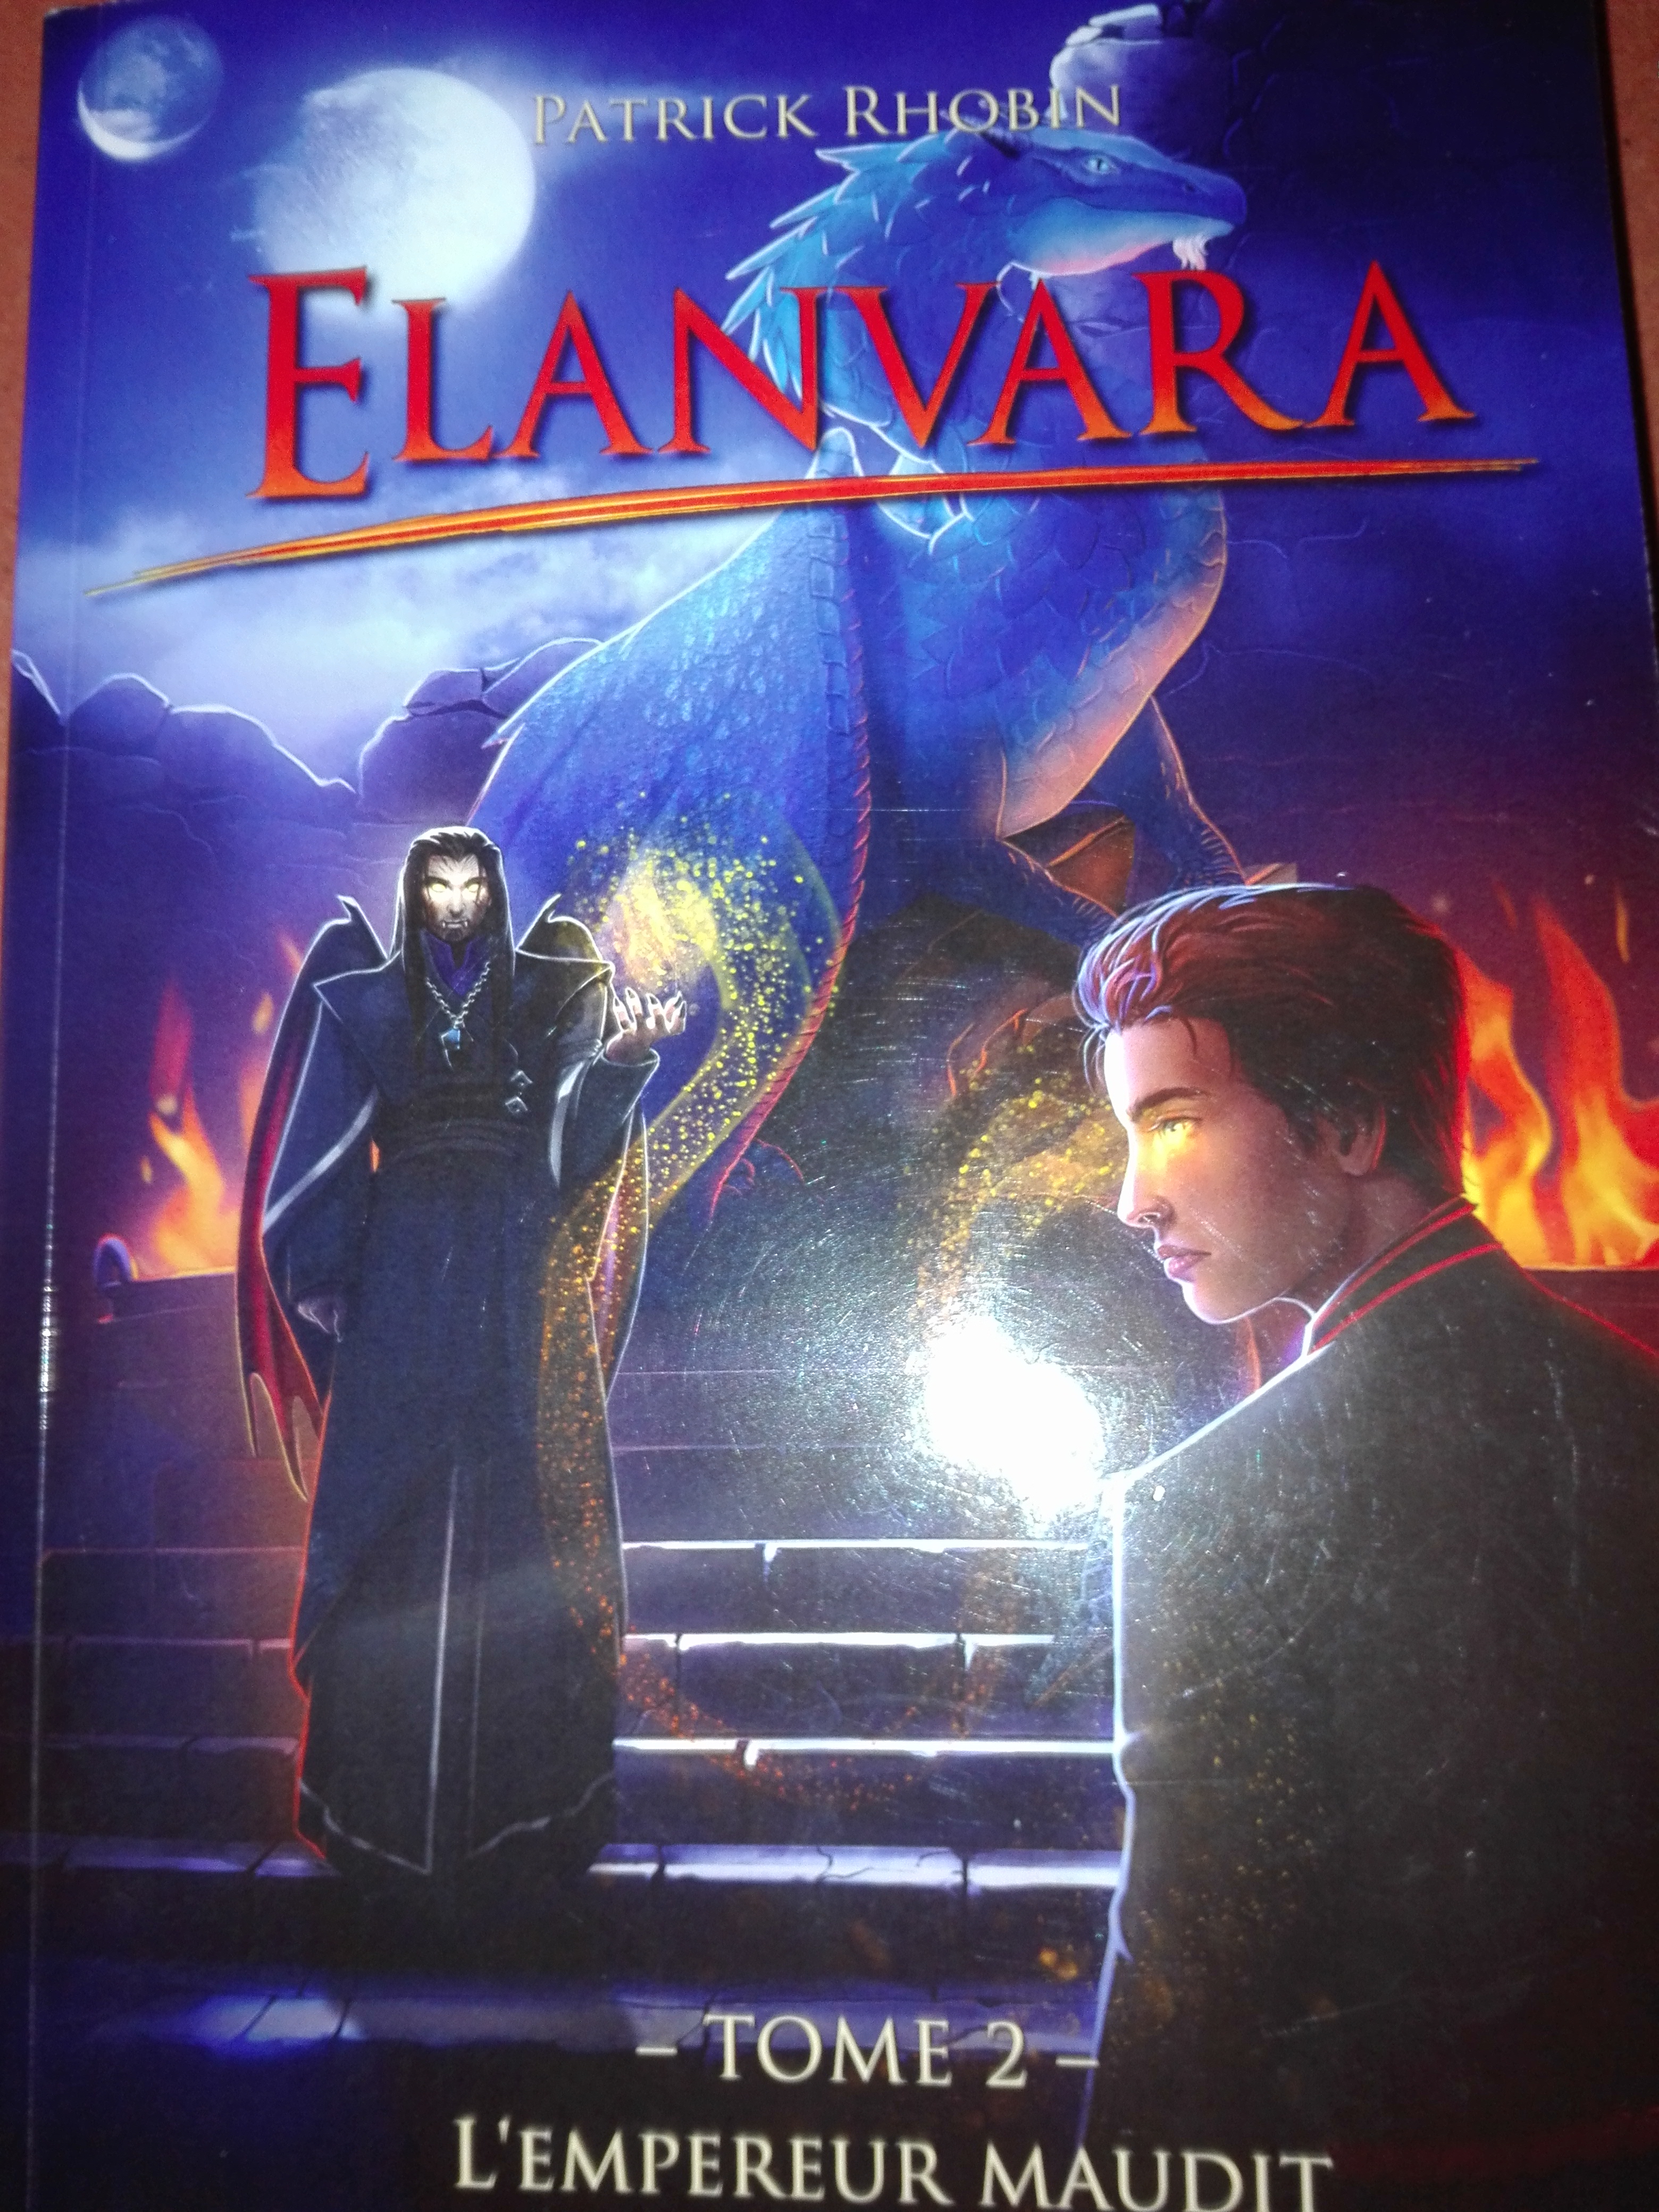 Chronique du livre « Elanvara » – Tome 2 « L’empereur maudit »